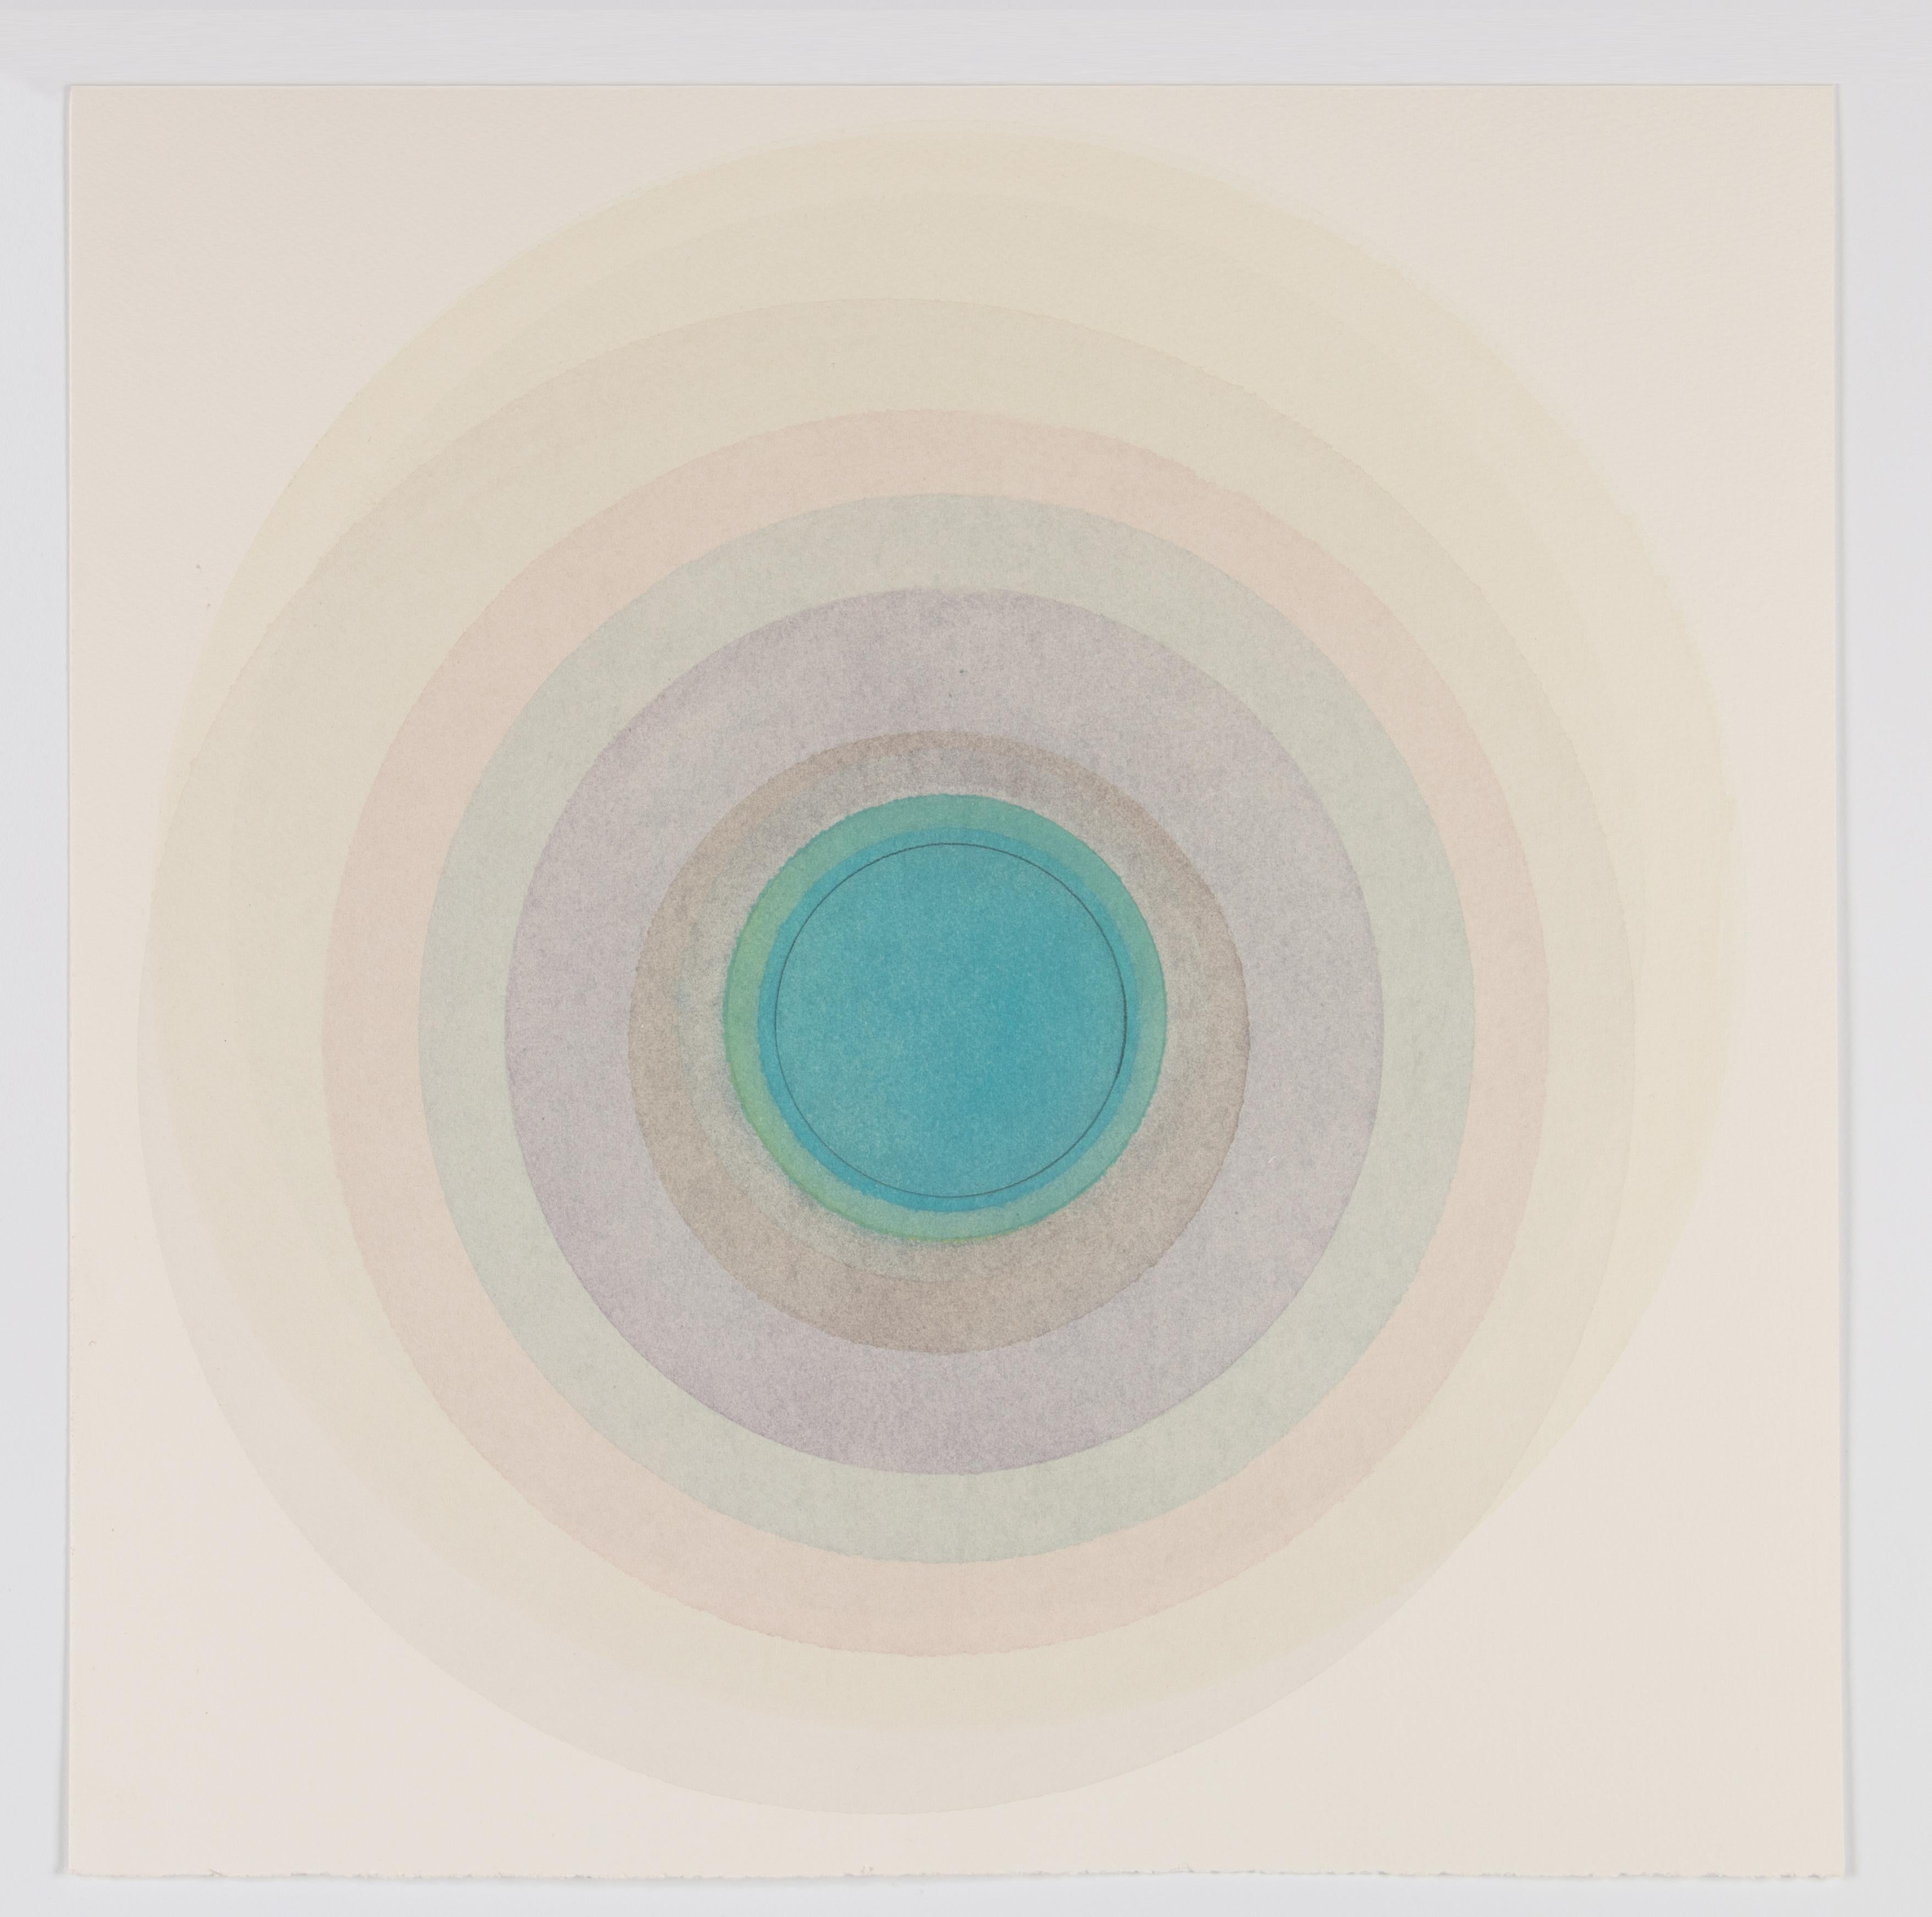 Evan Venegas Abstract Drawing – Coaxist 10819 – abstraktes geometrisches Aquarell auf Papier in weichem Pastellfarben